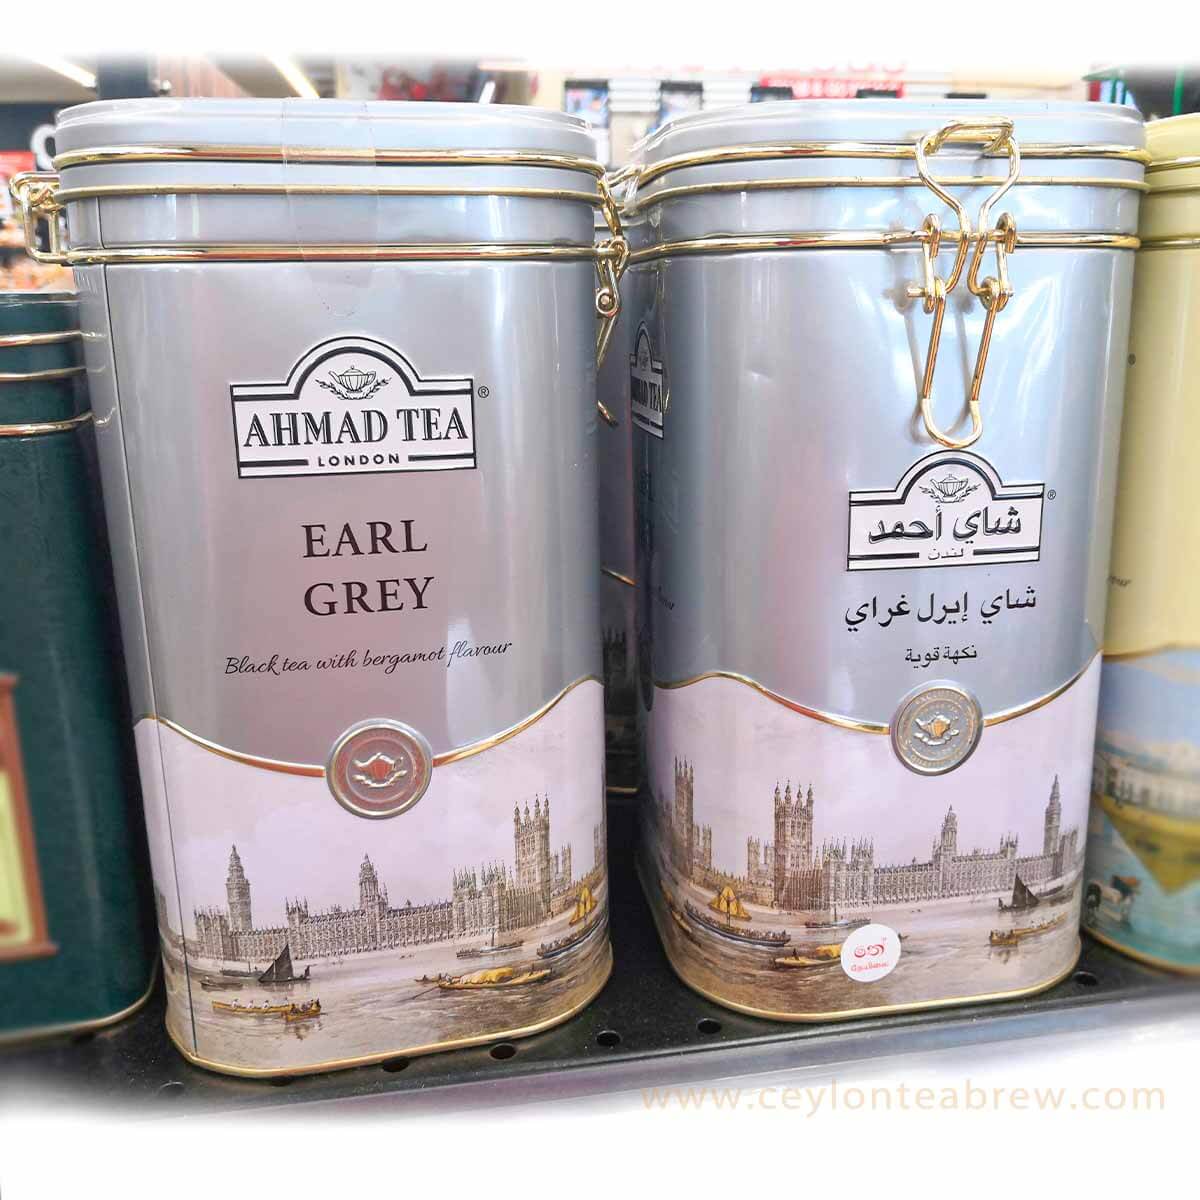 Ahmed Tea London Earl Grey tea